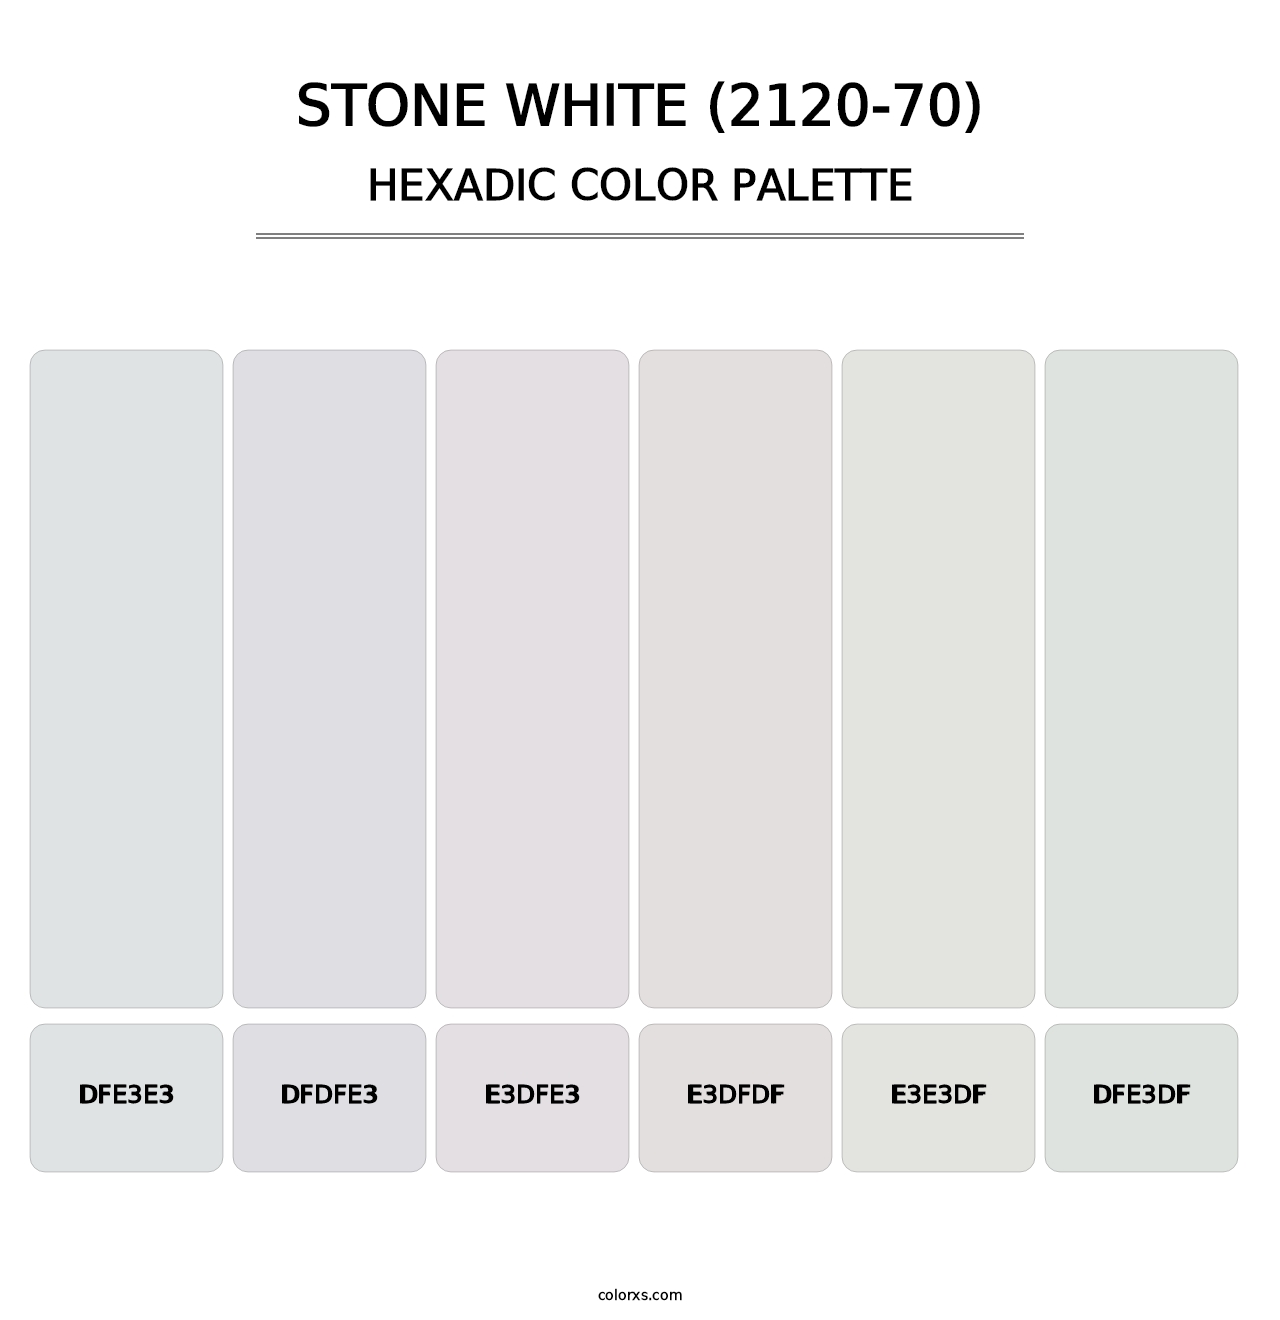 Stone White (2120-70) - Hexadic Color Palette